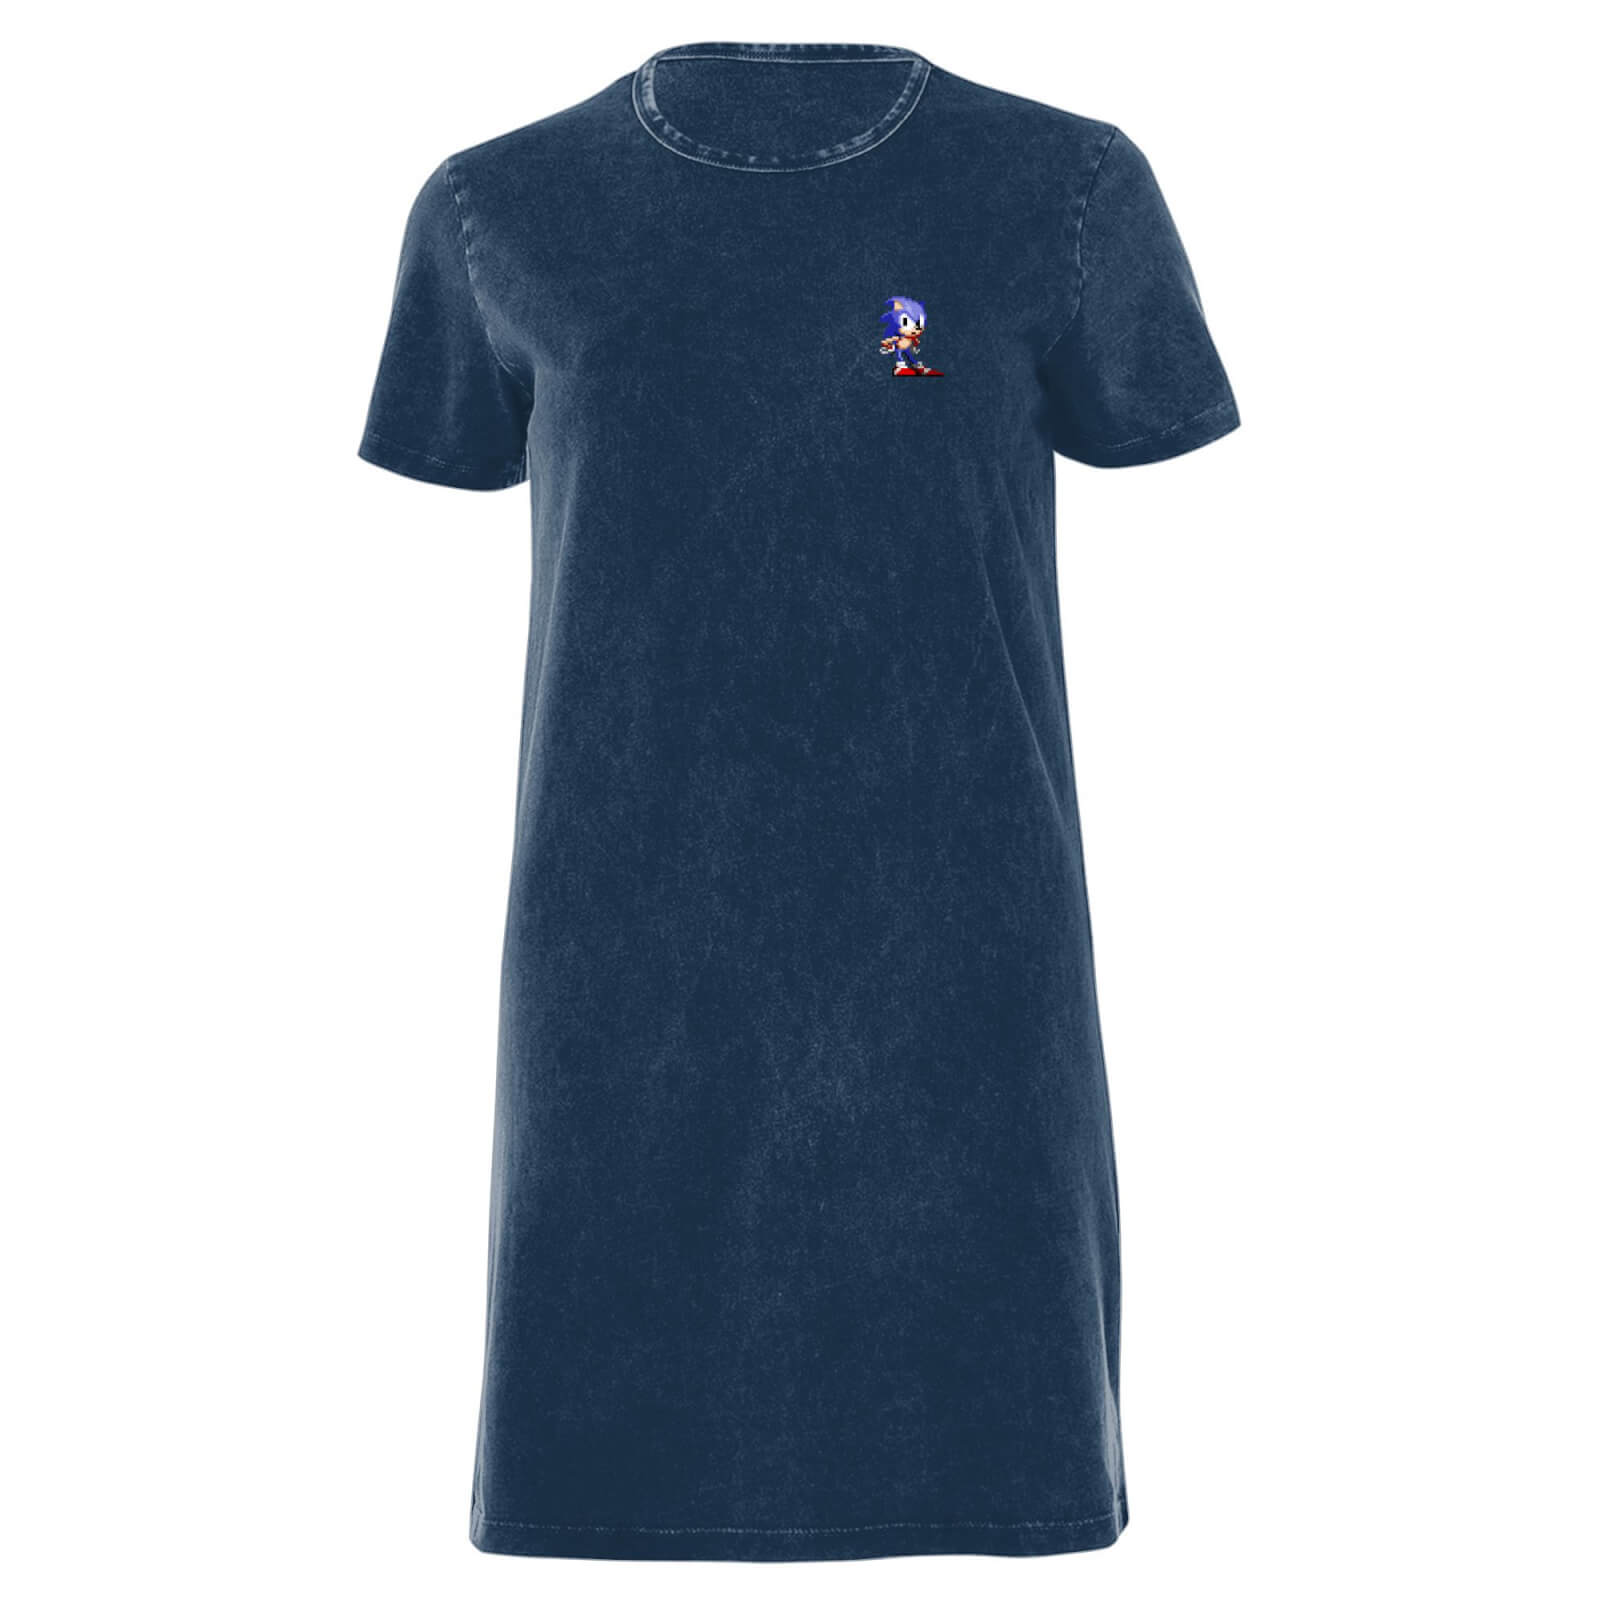 Sega Sonic Pixel Women's T-Shirt Dress - Navy Acid Wash - XS - Navy Acid Wash